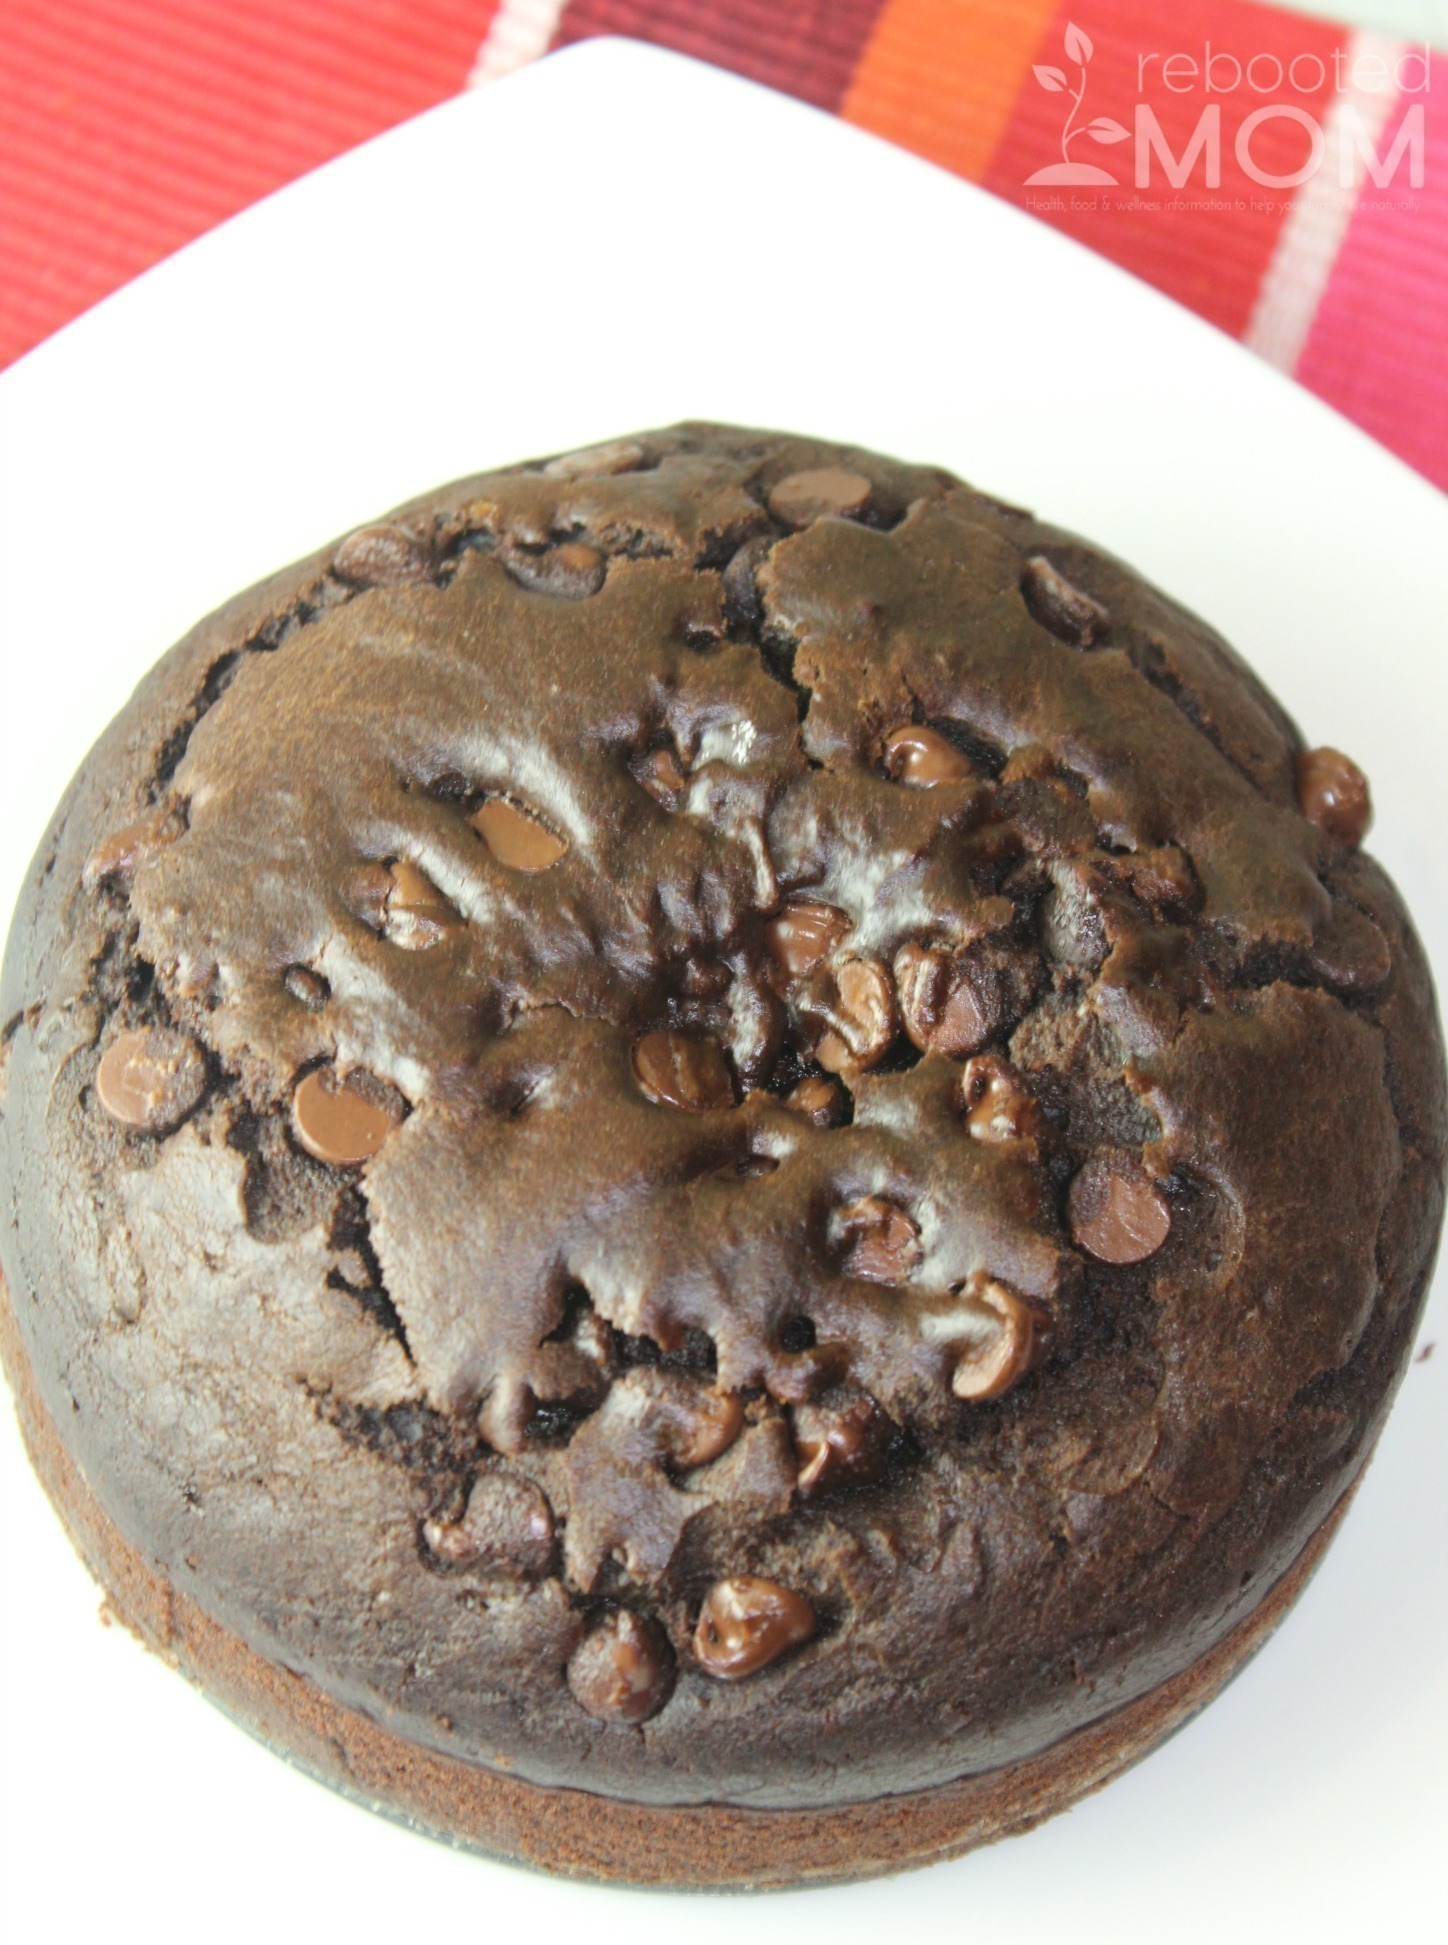 Homemade Chocolate Snack Cake Mix